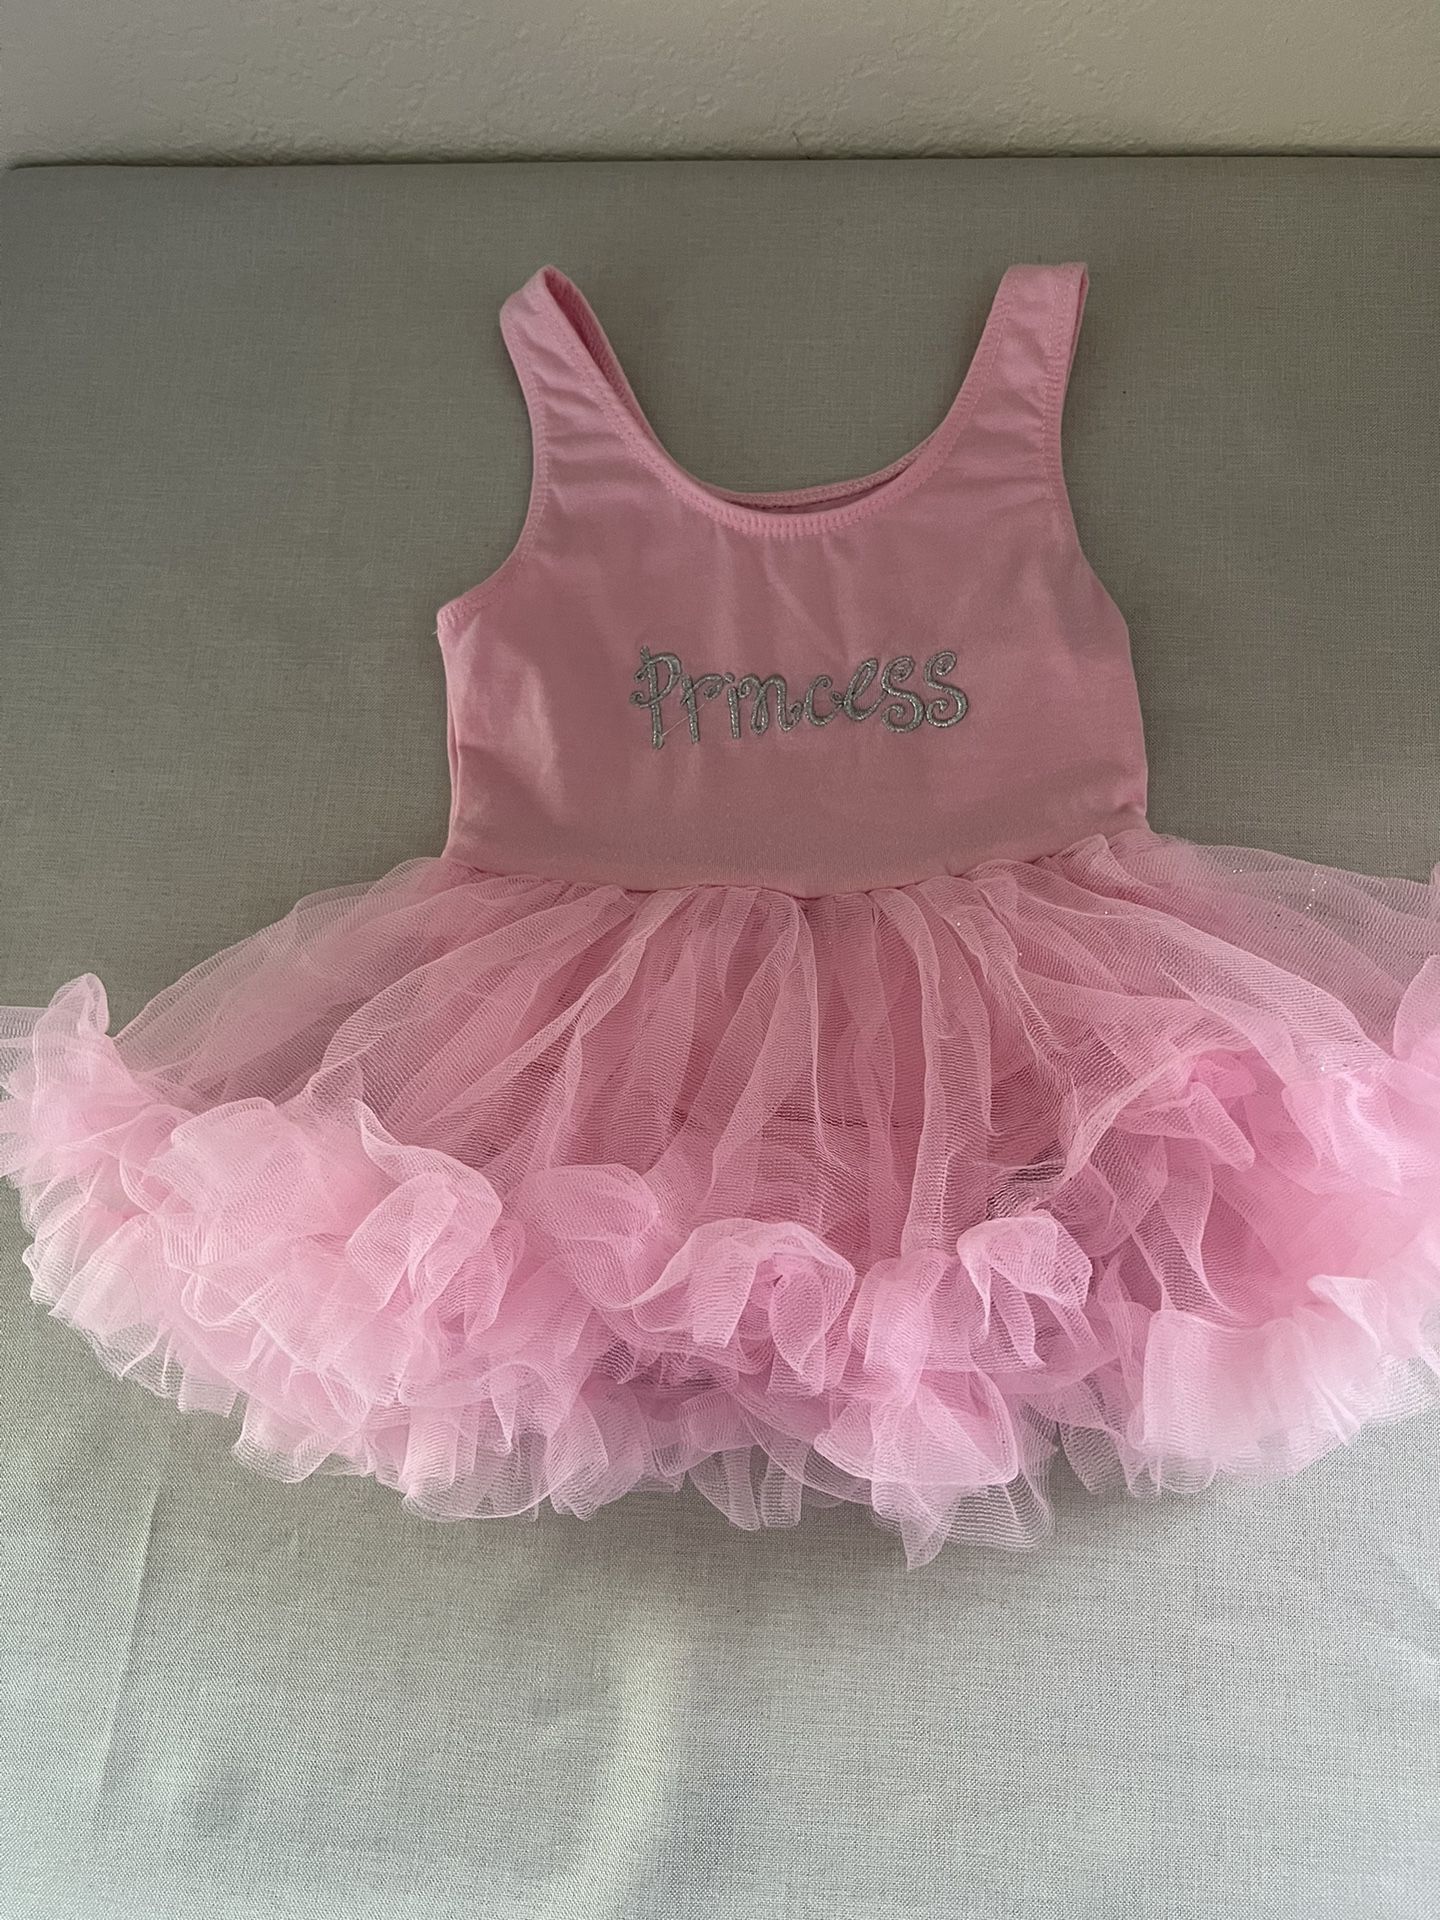 Pink Tutu Dress sz 6-12 months- Excellent 